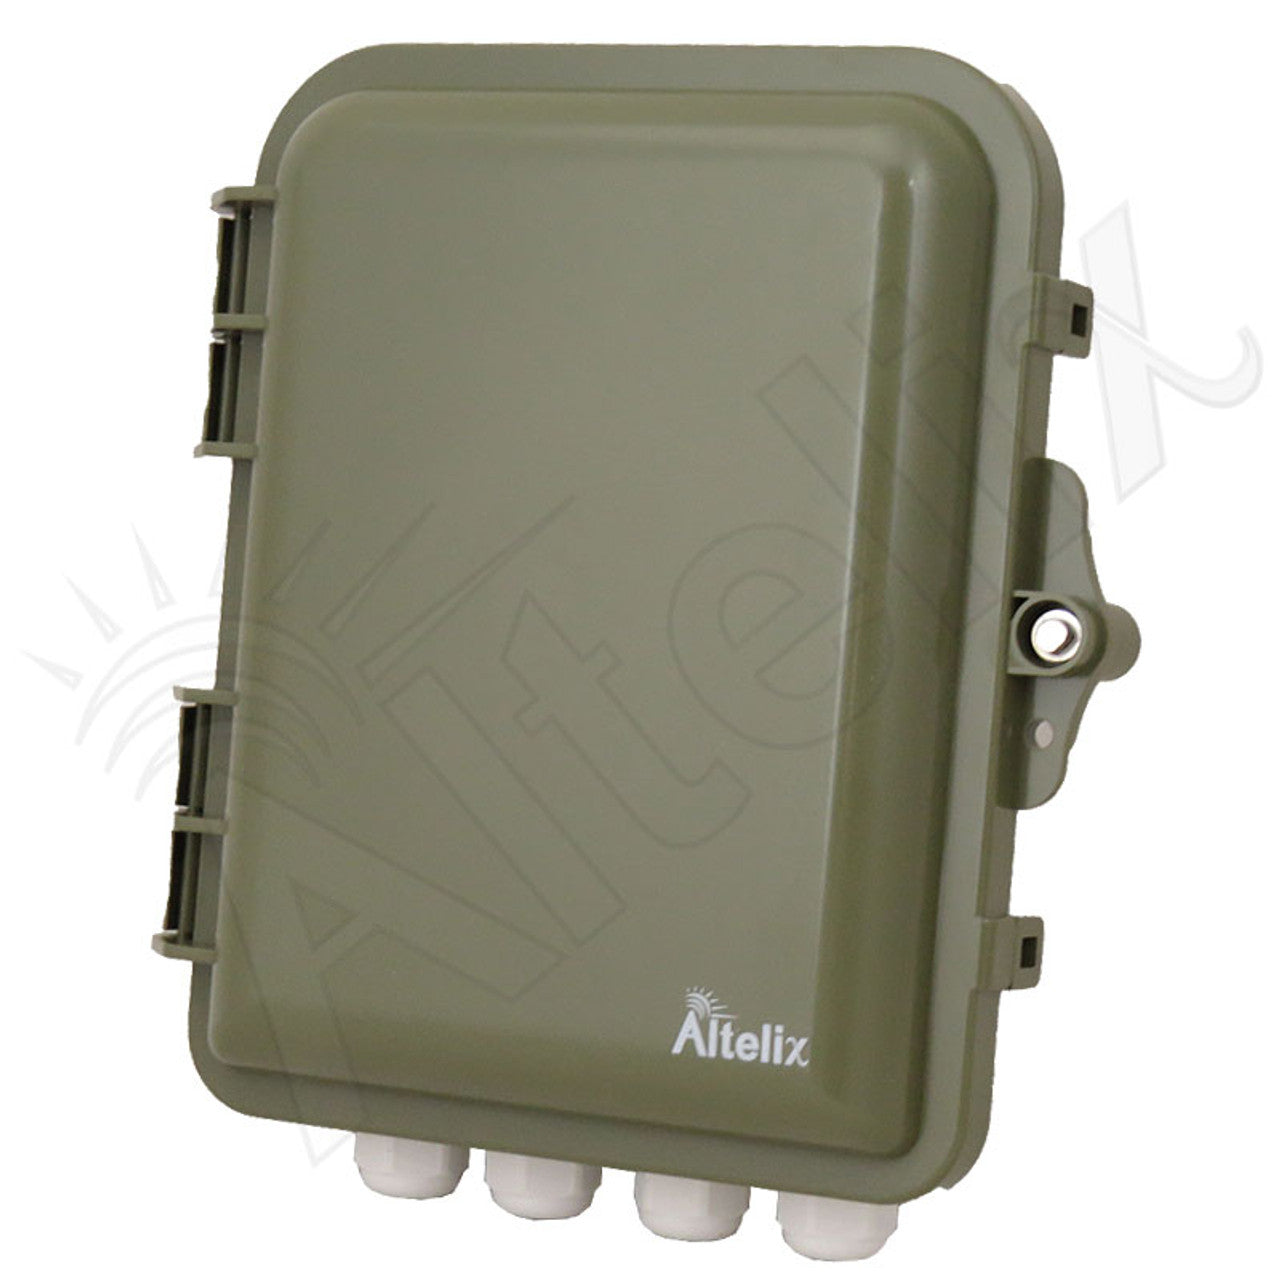 Altelix 9x8x3 IP66 NEMA 4X PC+ABS Weatherproof Utility Box with Hinged Door and Aluminum Mounting Plate-3